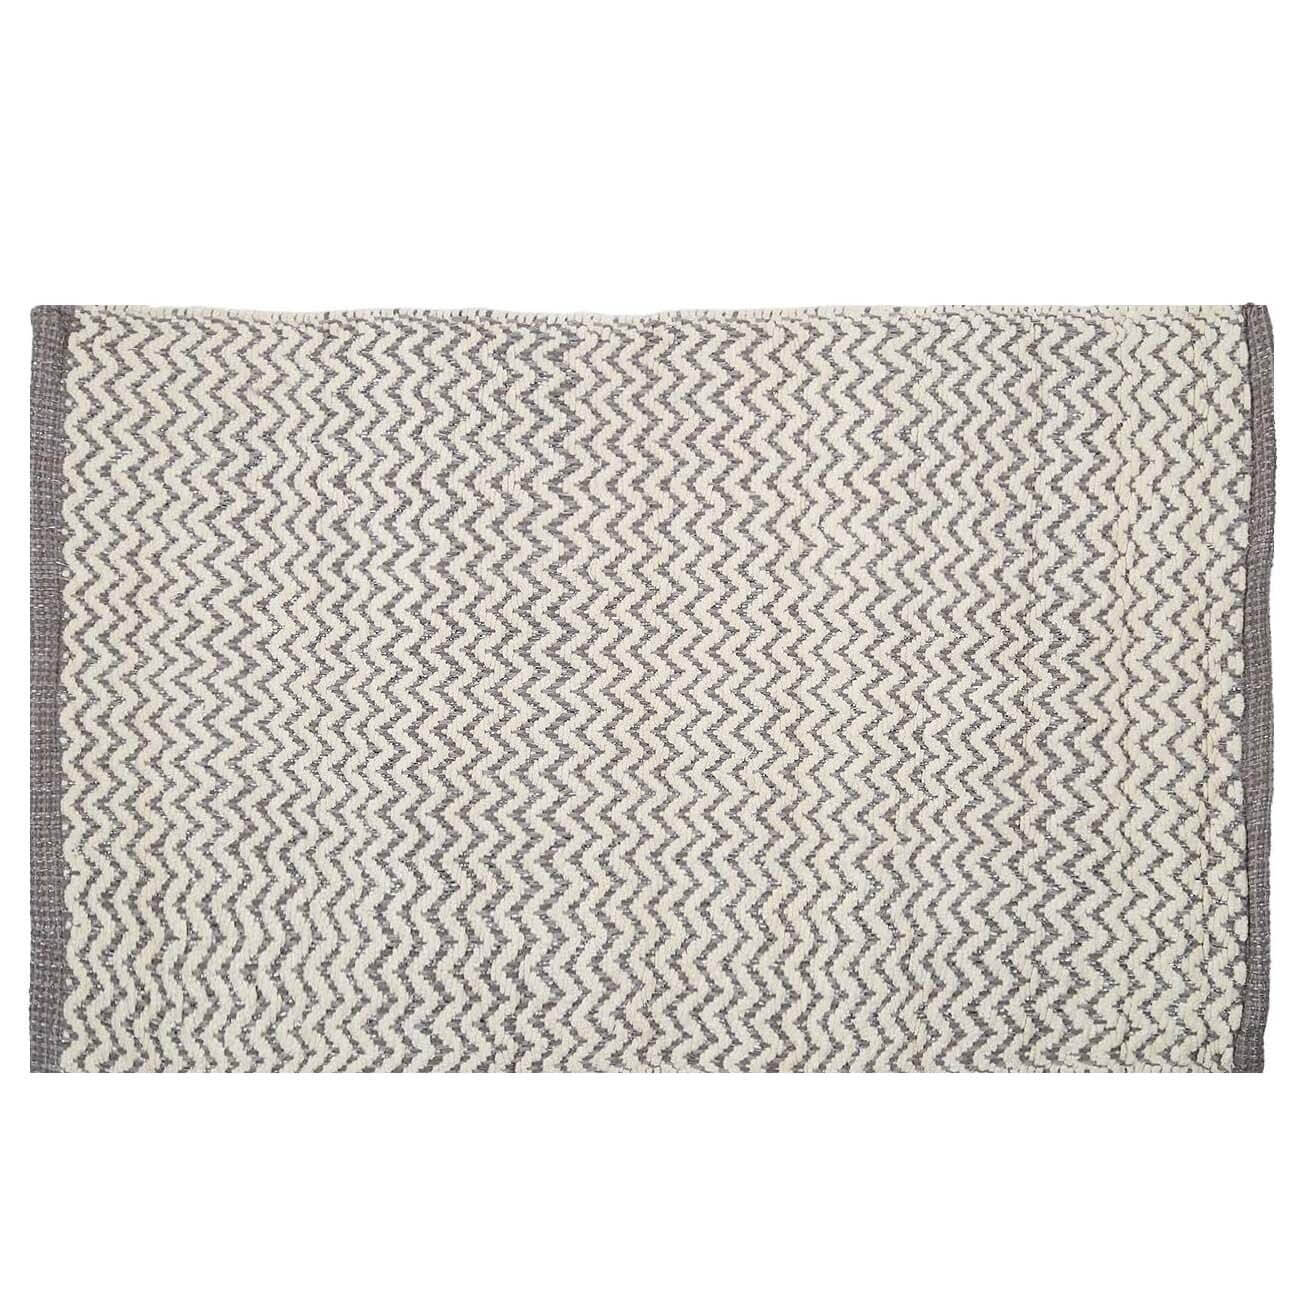 Коврик, 50х80 см, хлопок, бело-серый, Зигзаги с люрексом, Shiny threads